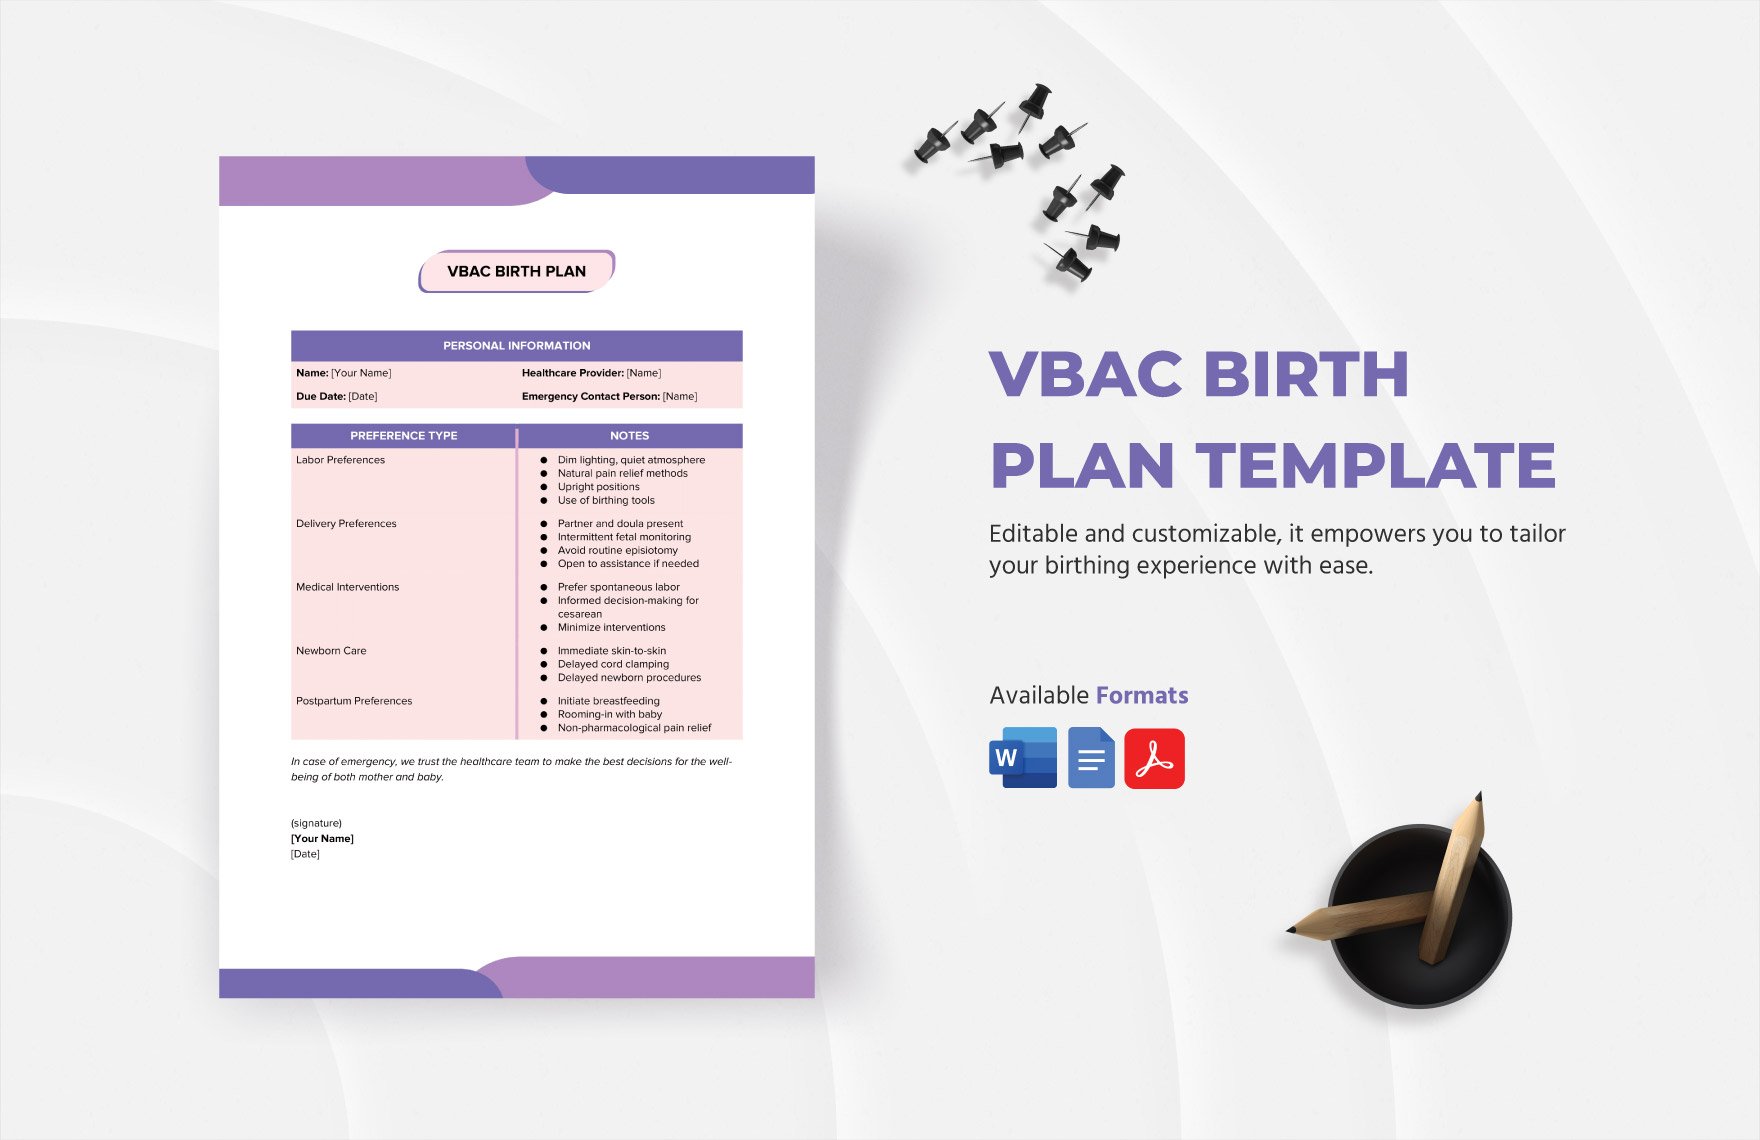 VBAC Birth Plan Template